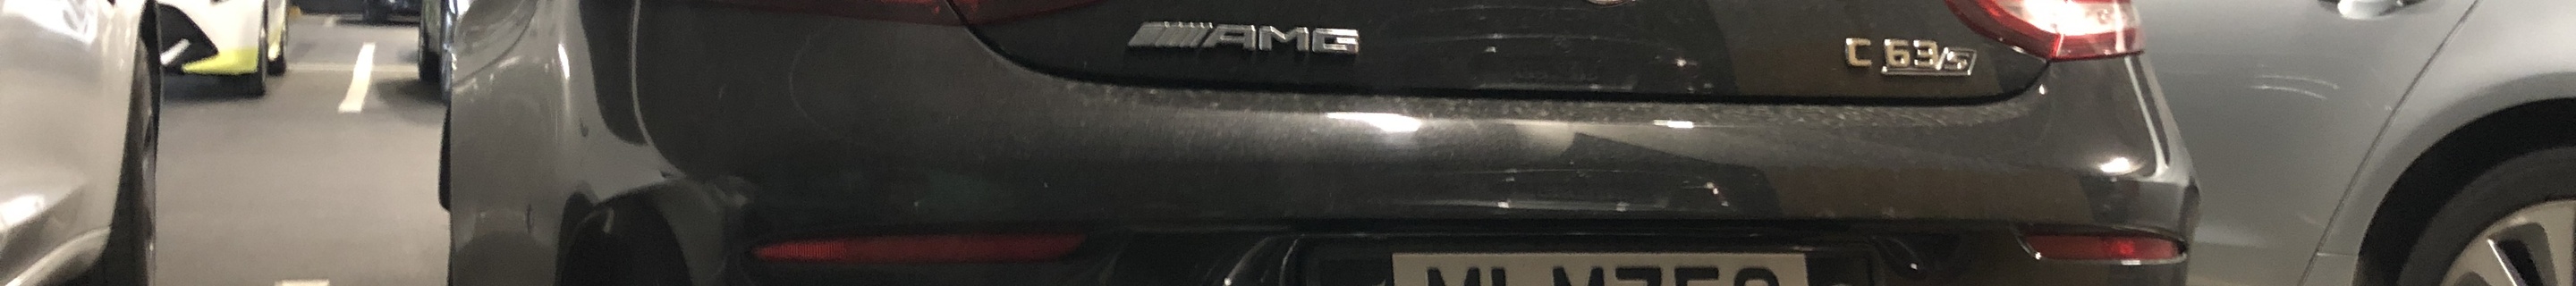 Mercedes-AMG C 63 S Convertible A205 2018